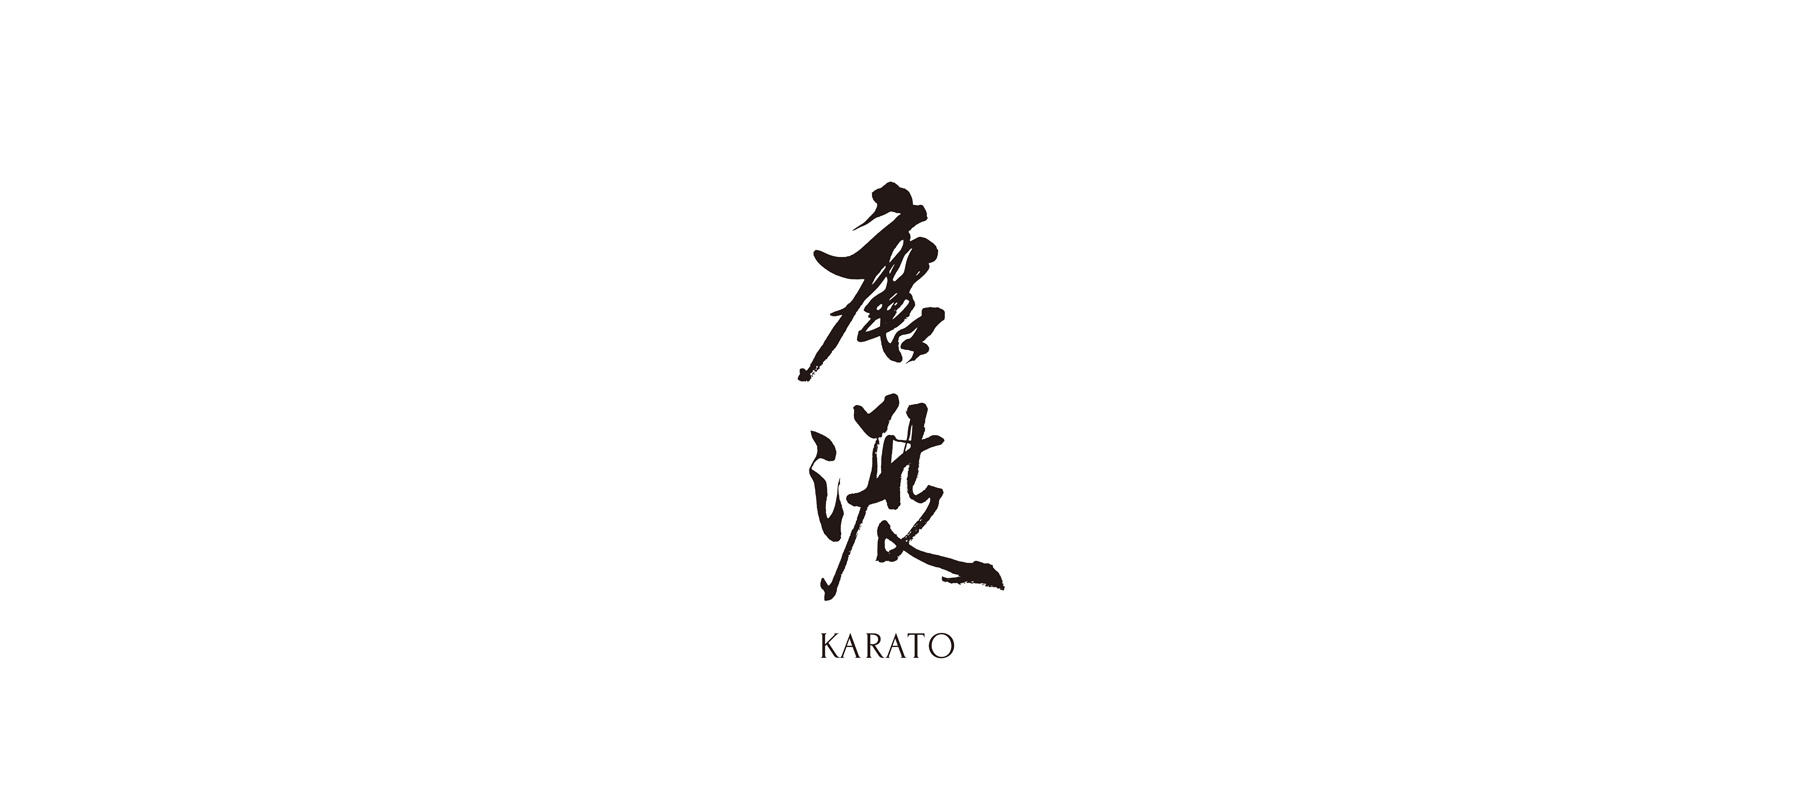 Karato's images2